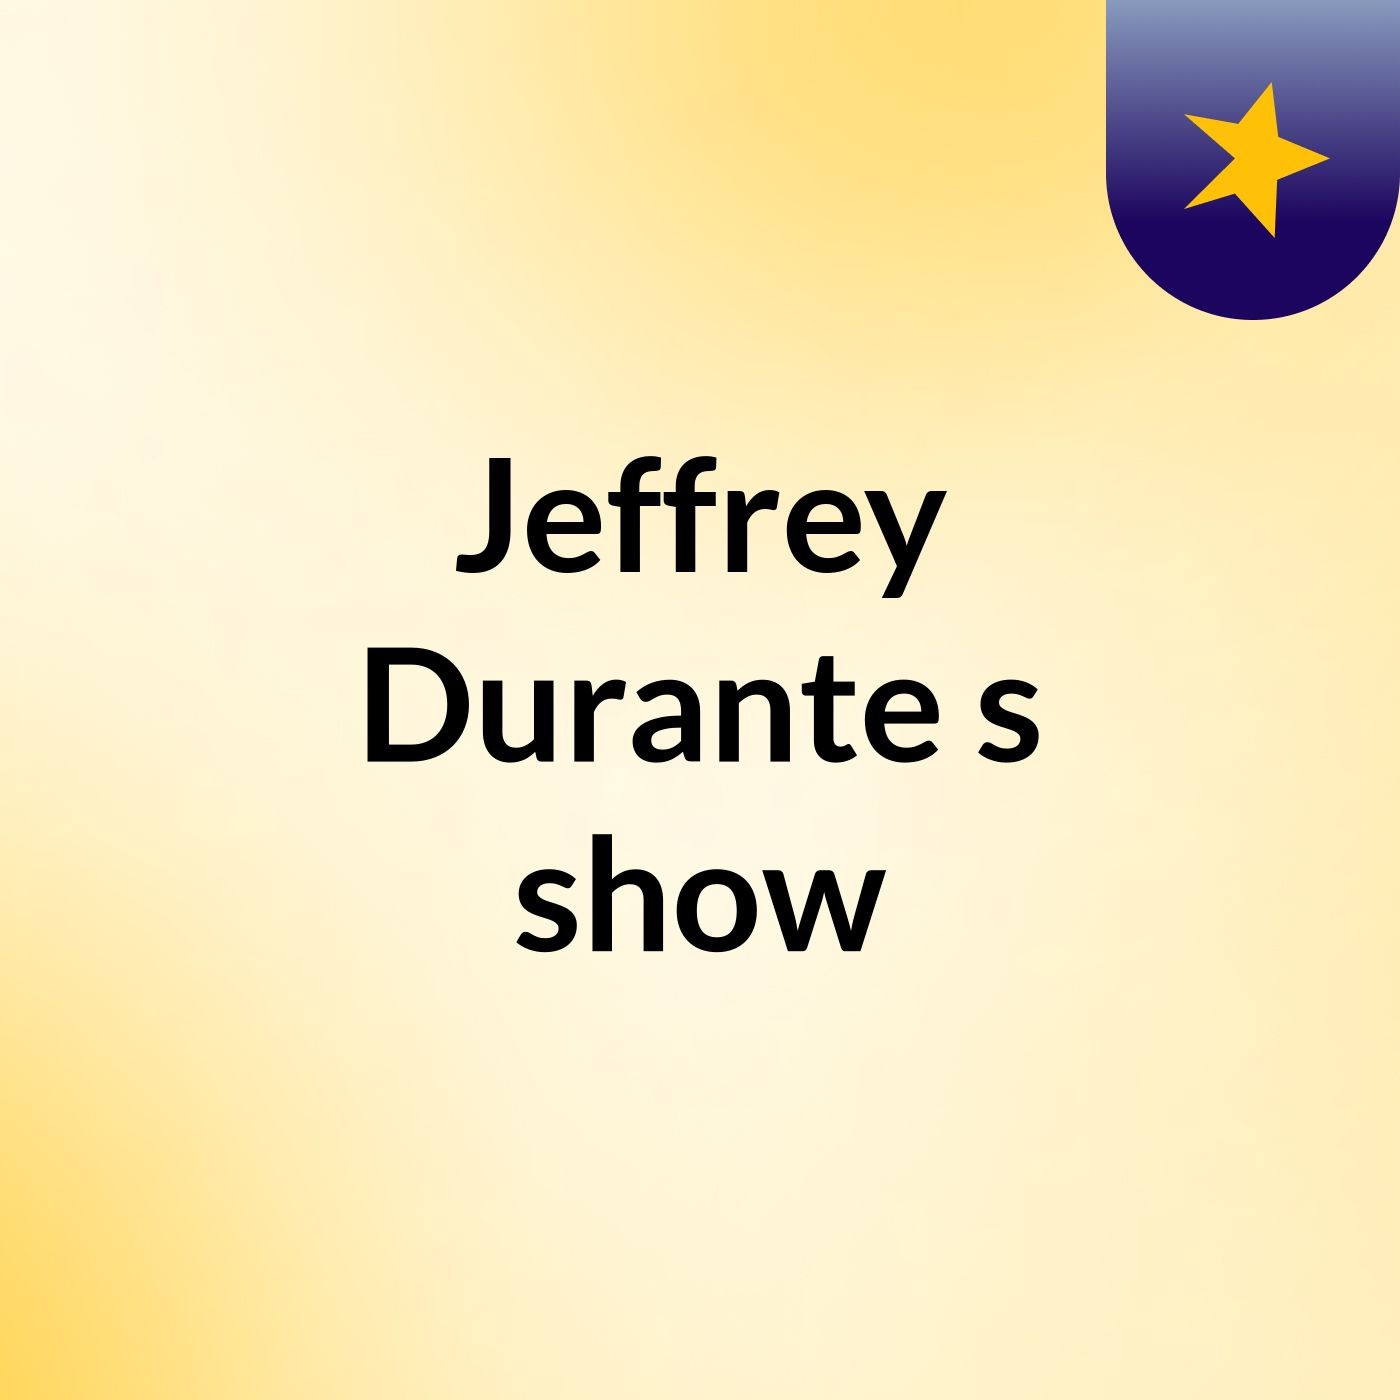 Jeffrey Durante's show